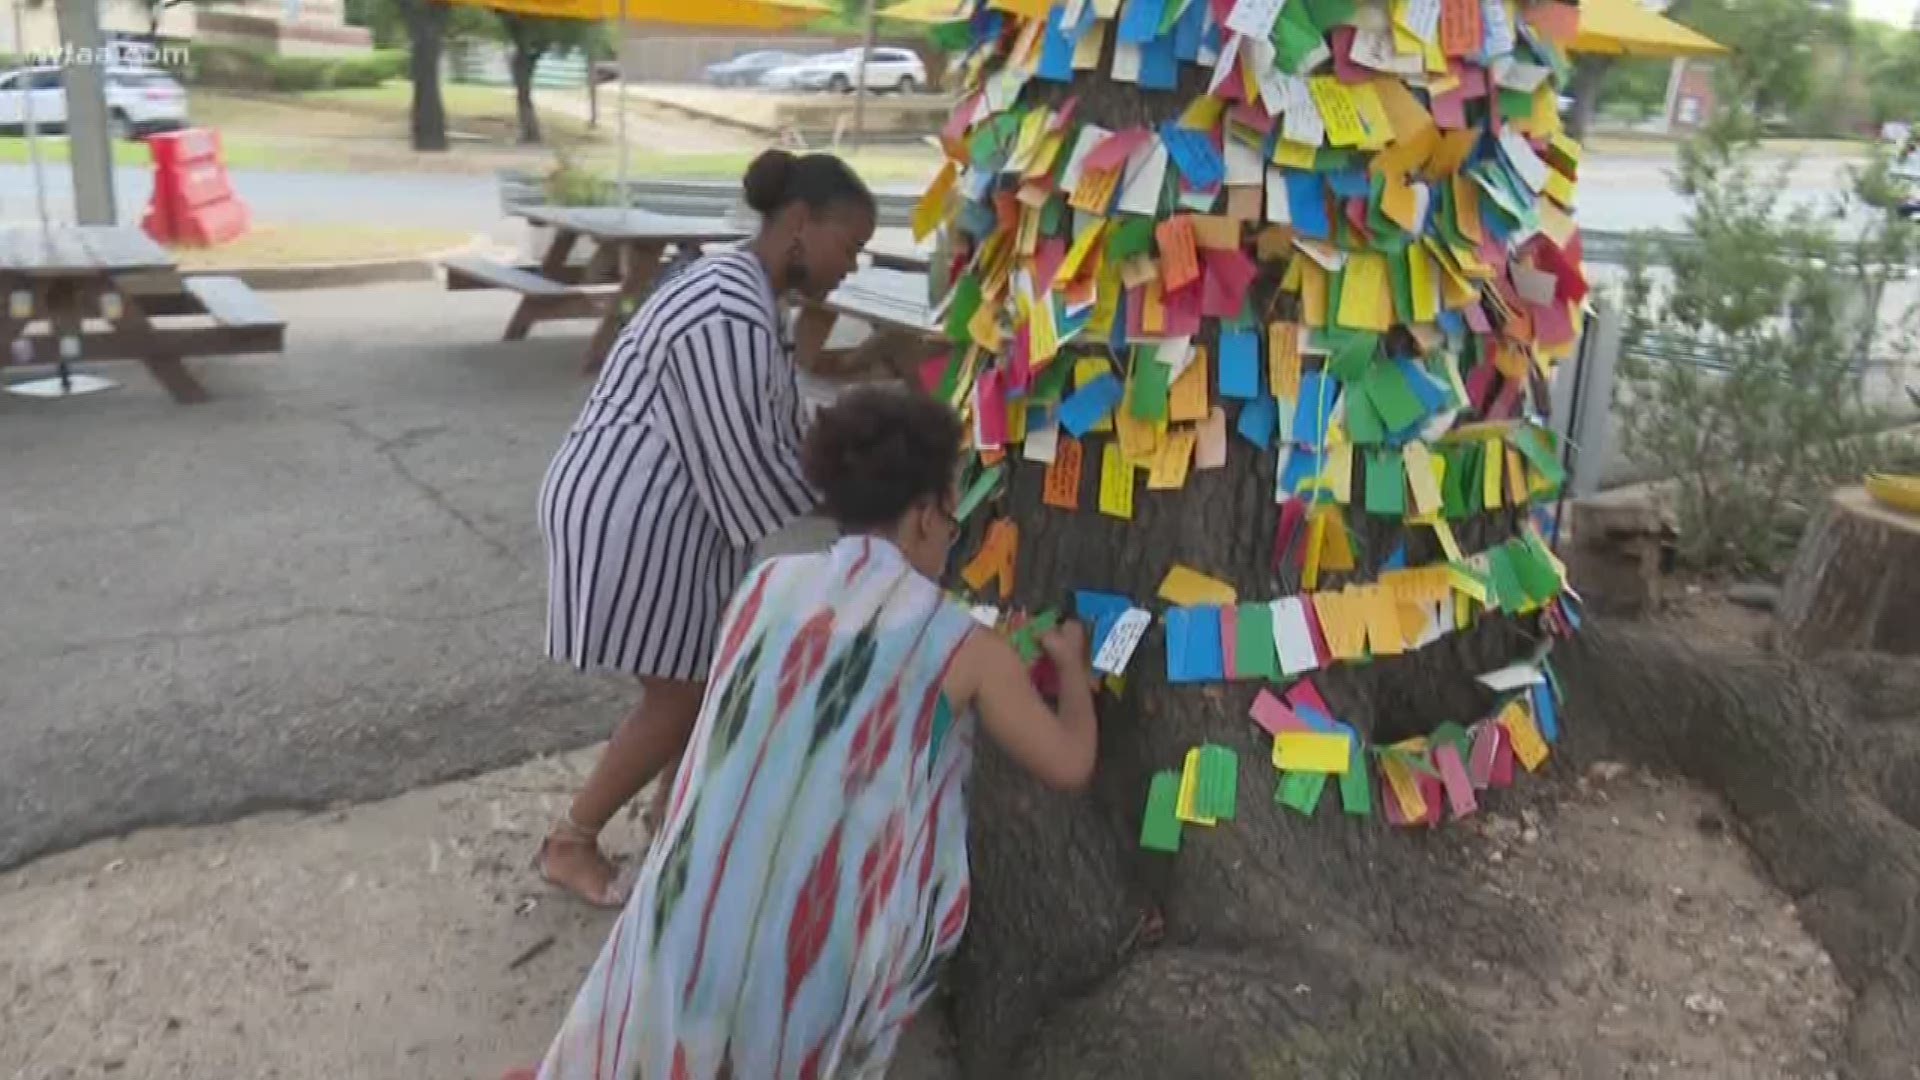 Wishing tree inspires North Texans